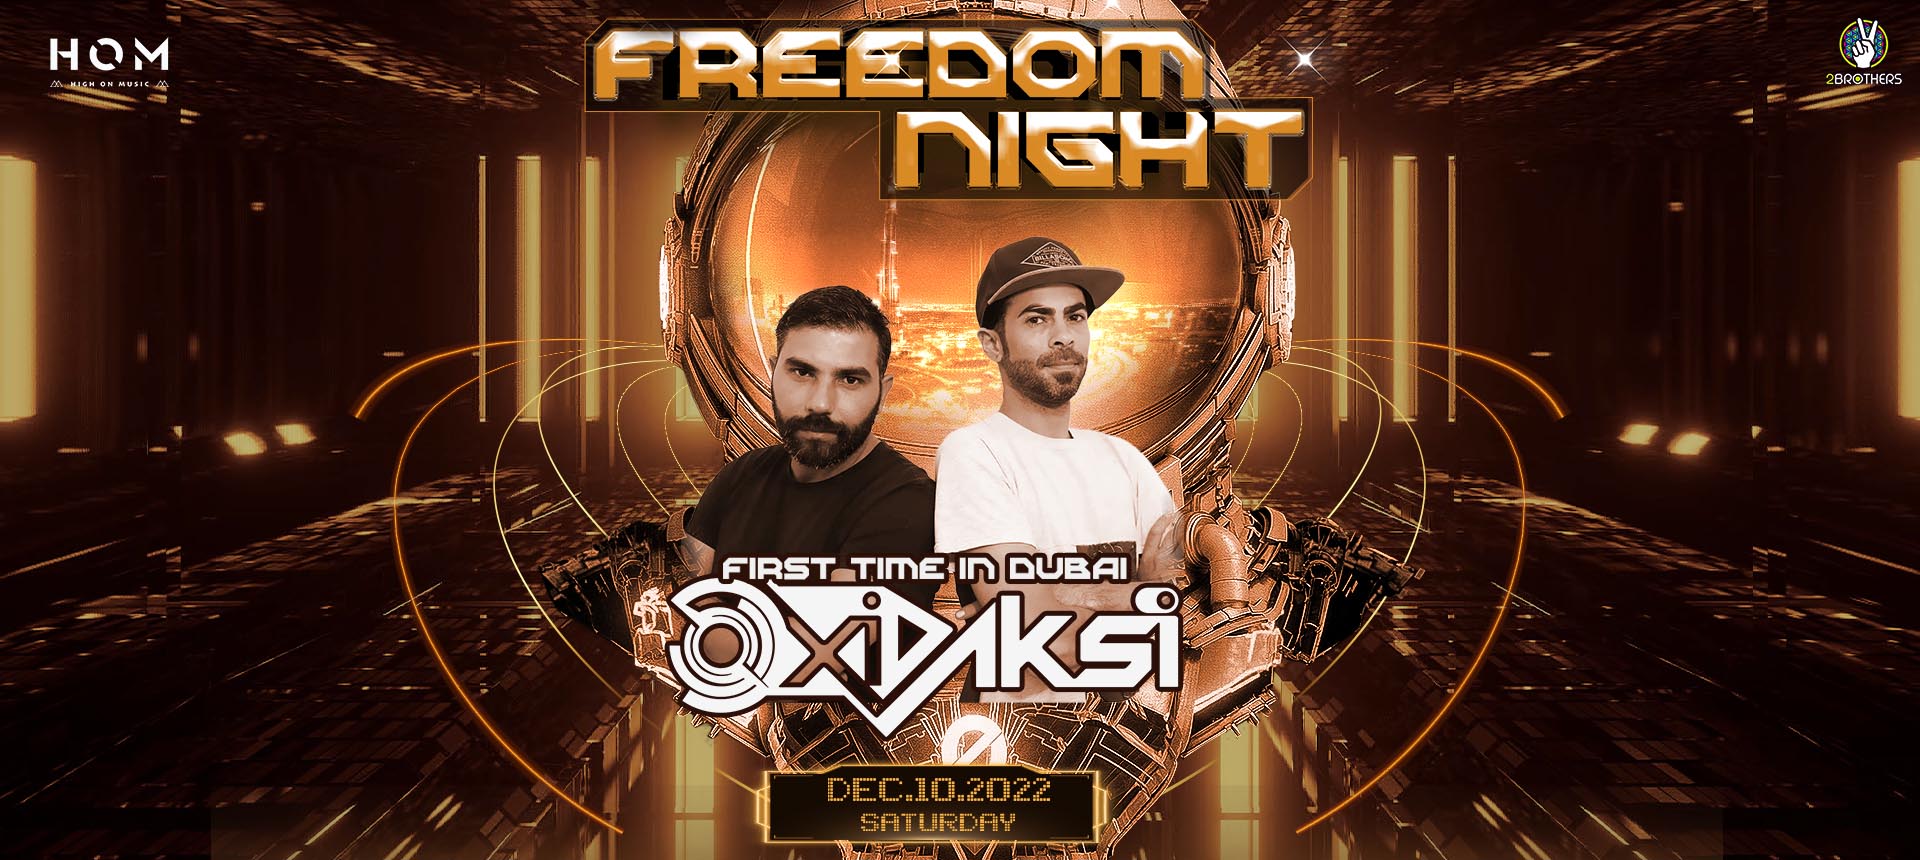 Freedom Night feat. Oxidaksi 